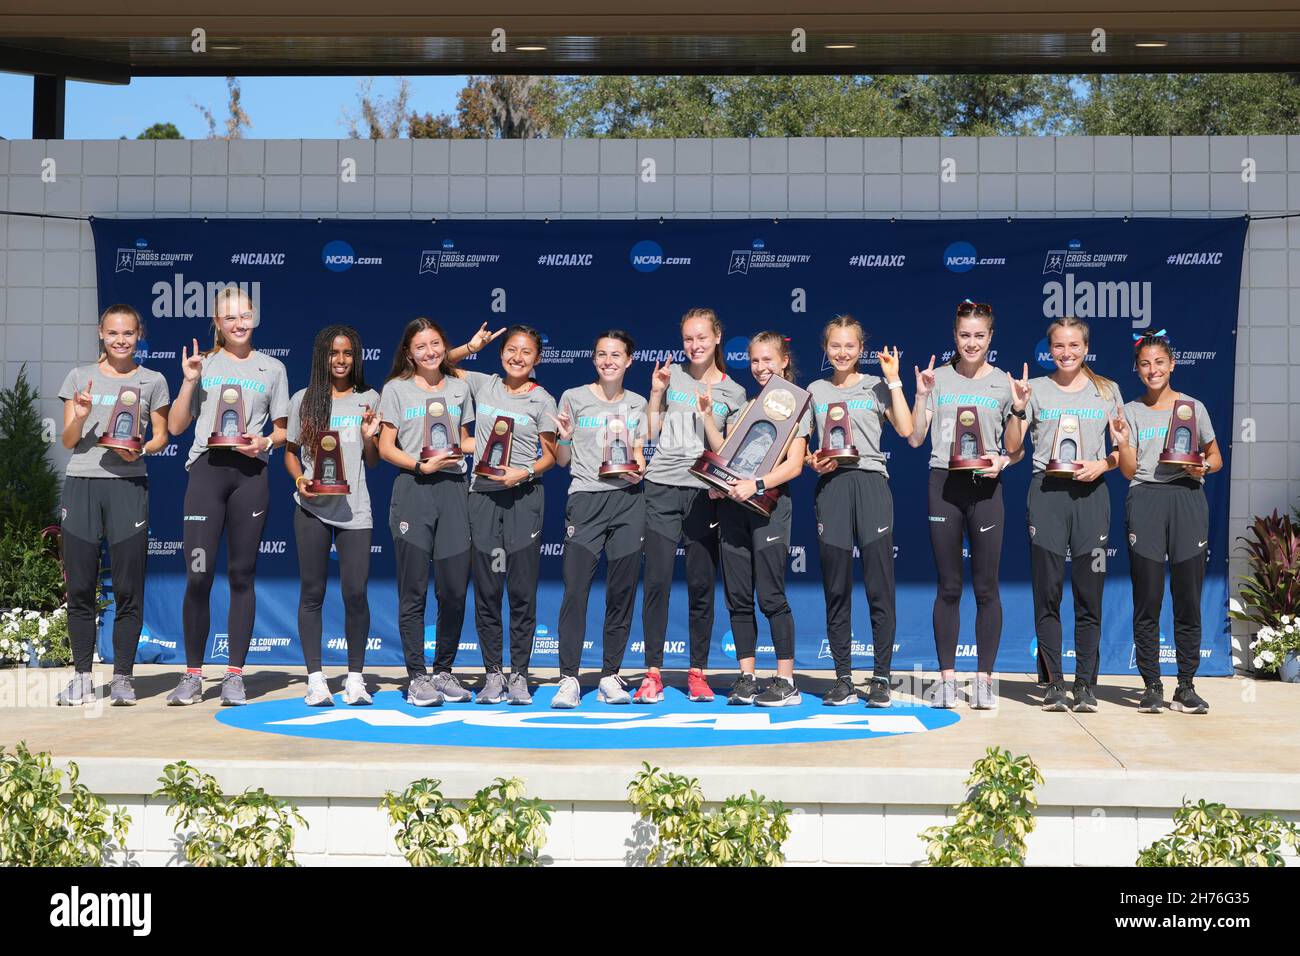 Die New Mexico Lobos Damen-Mannschaft posiert mit Trophäe, nachdem sie bei den NCAA Cross Country Meisterschaften im Apalachee Regional Park, Saturd, den dritten Platz belegt hat Stockfoto